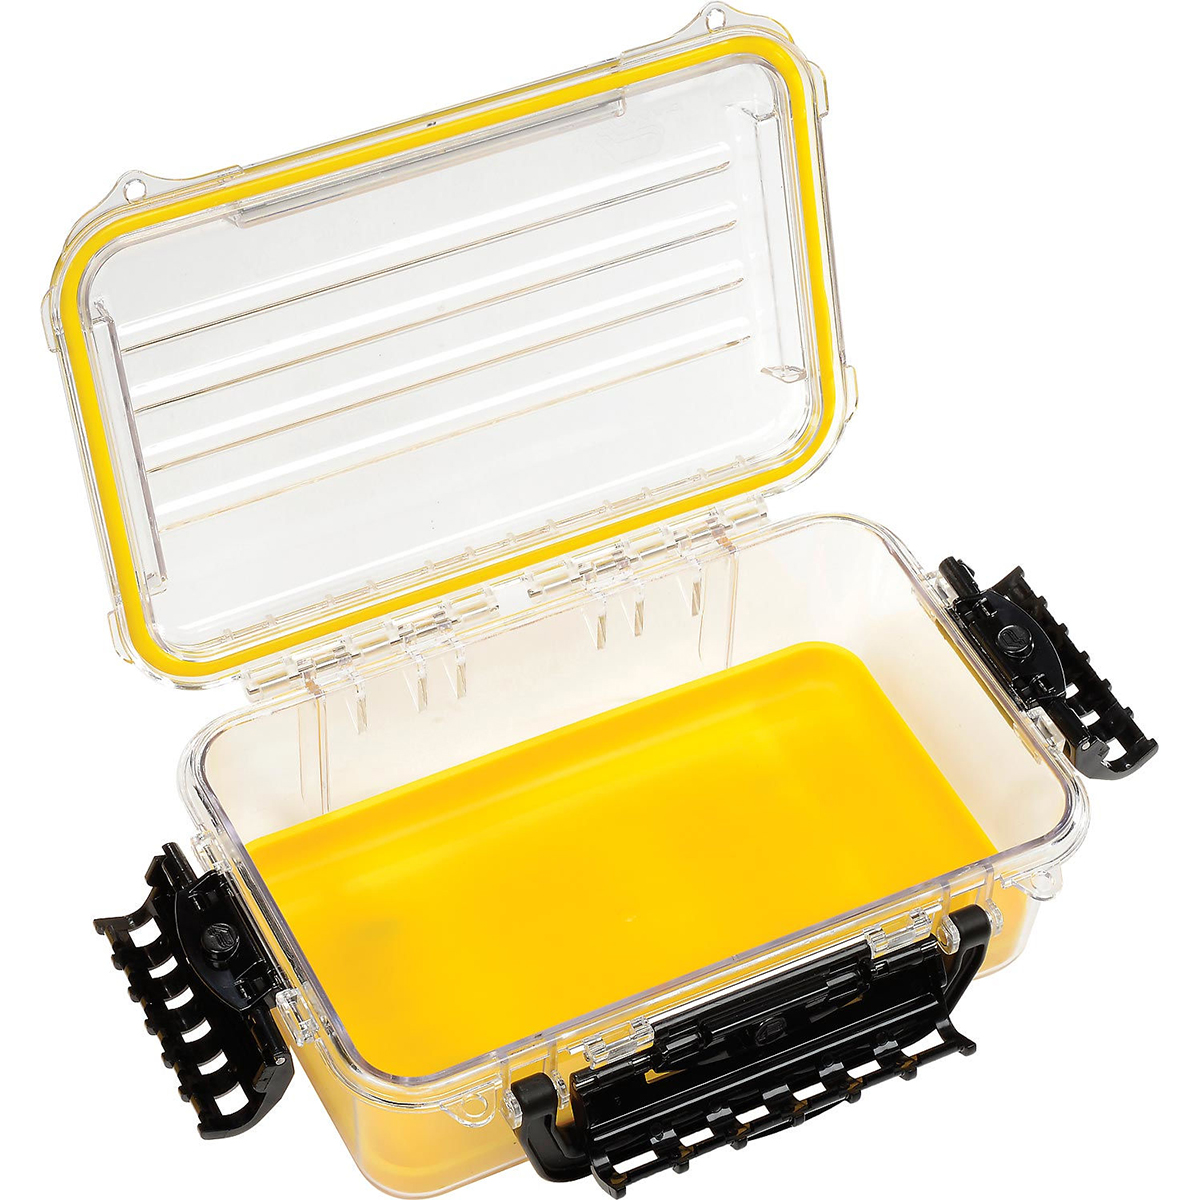 Plano Guide Series 3600 Field Box Waterproof Case, Medium - image 1 of 4